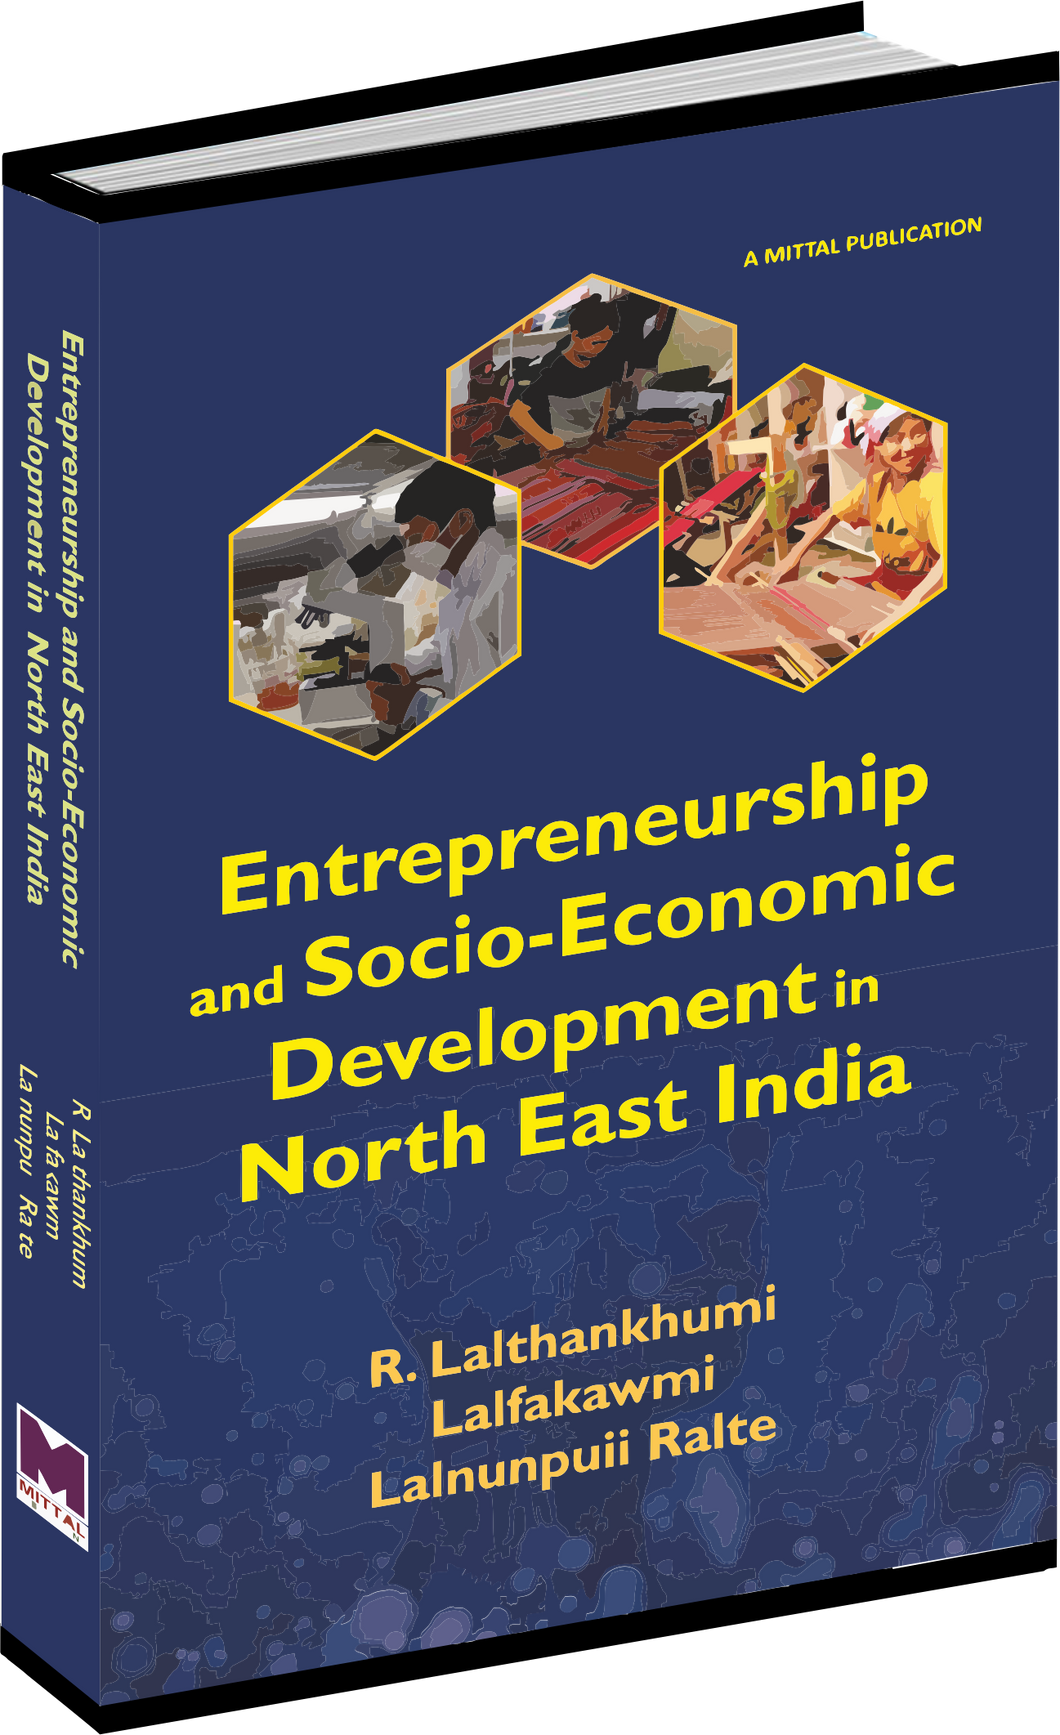 Entrepreneurship and Socio-Economic Development in Northeast India by R. Lalthankhumi, Lalfakawmi  & Lalnunpuii Ralte